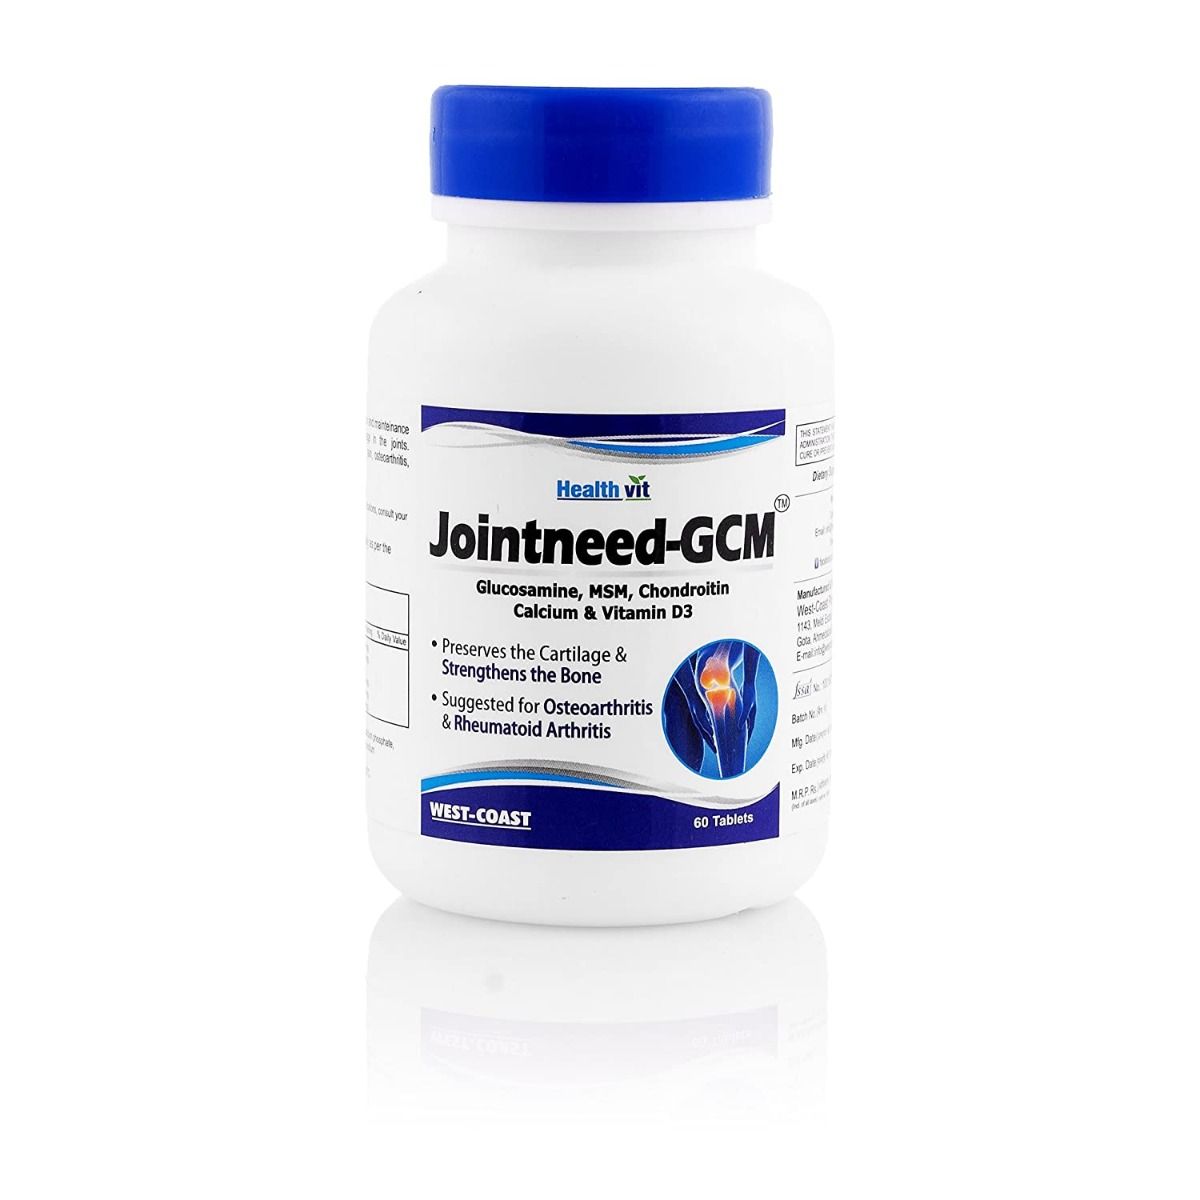 Healthvit Jointneed-GCM, 60 Tablets, Pack of 1 